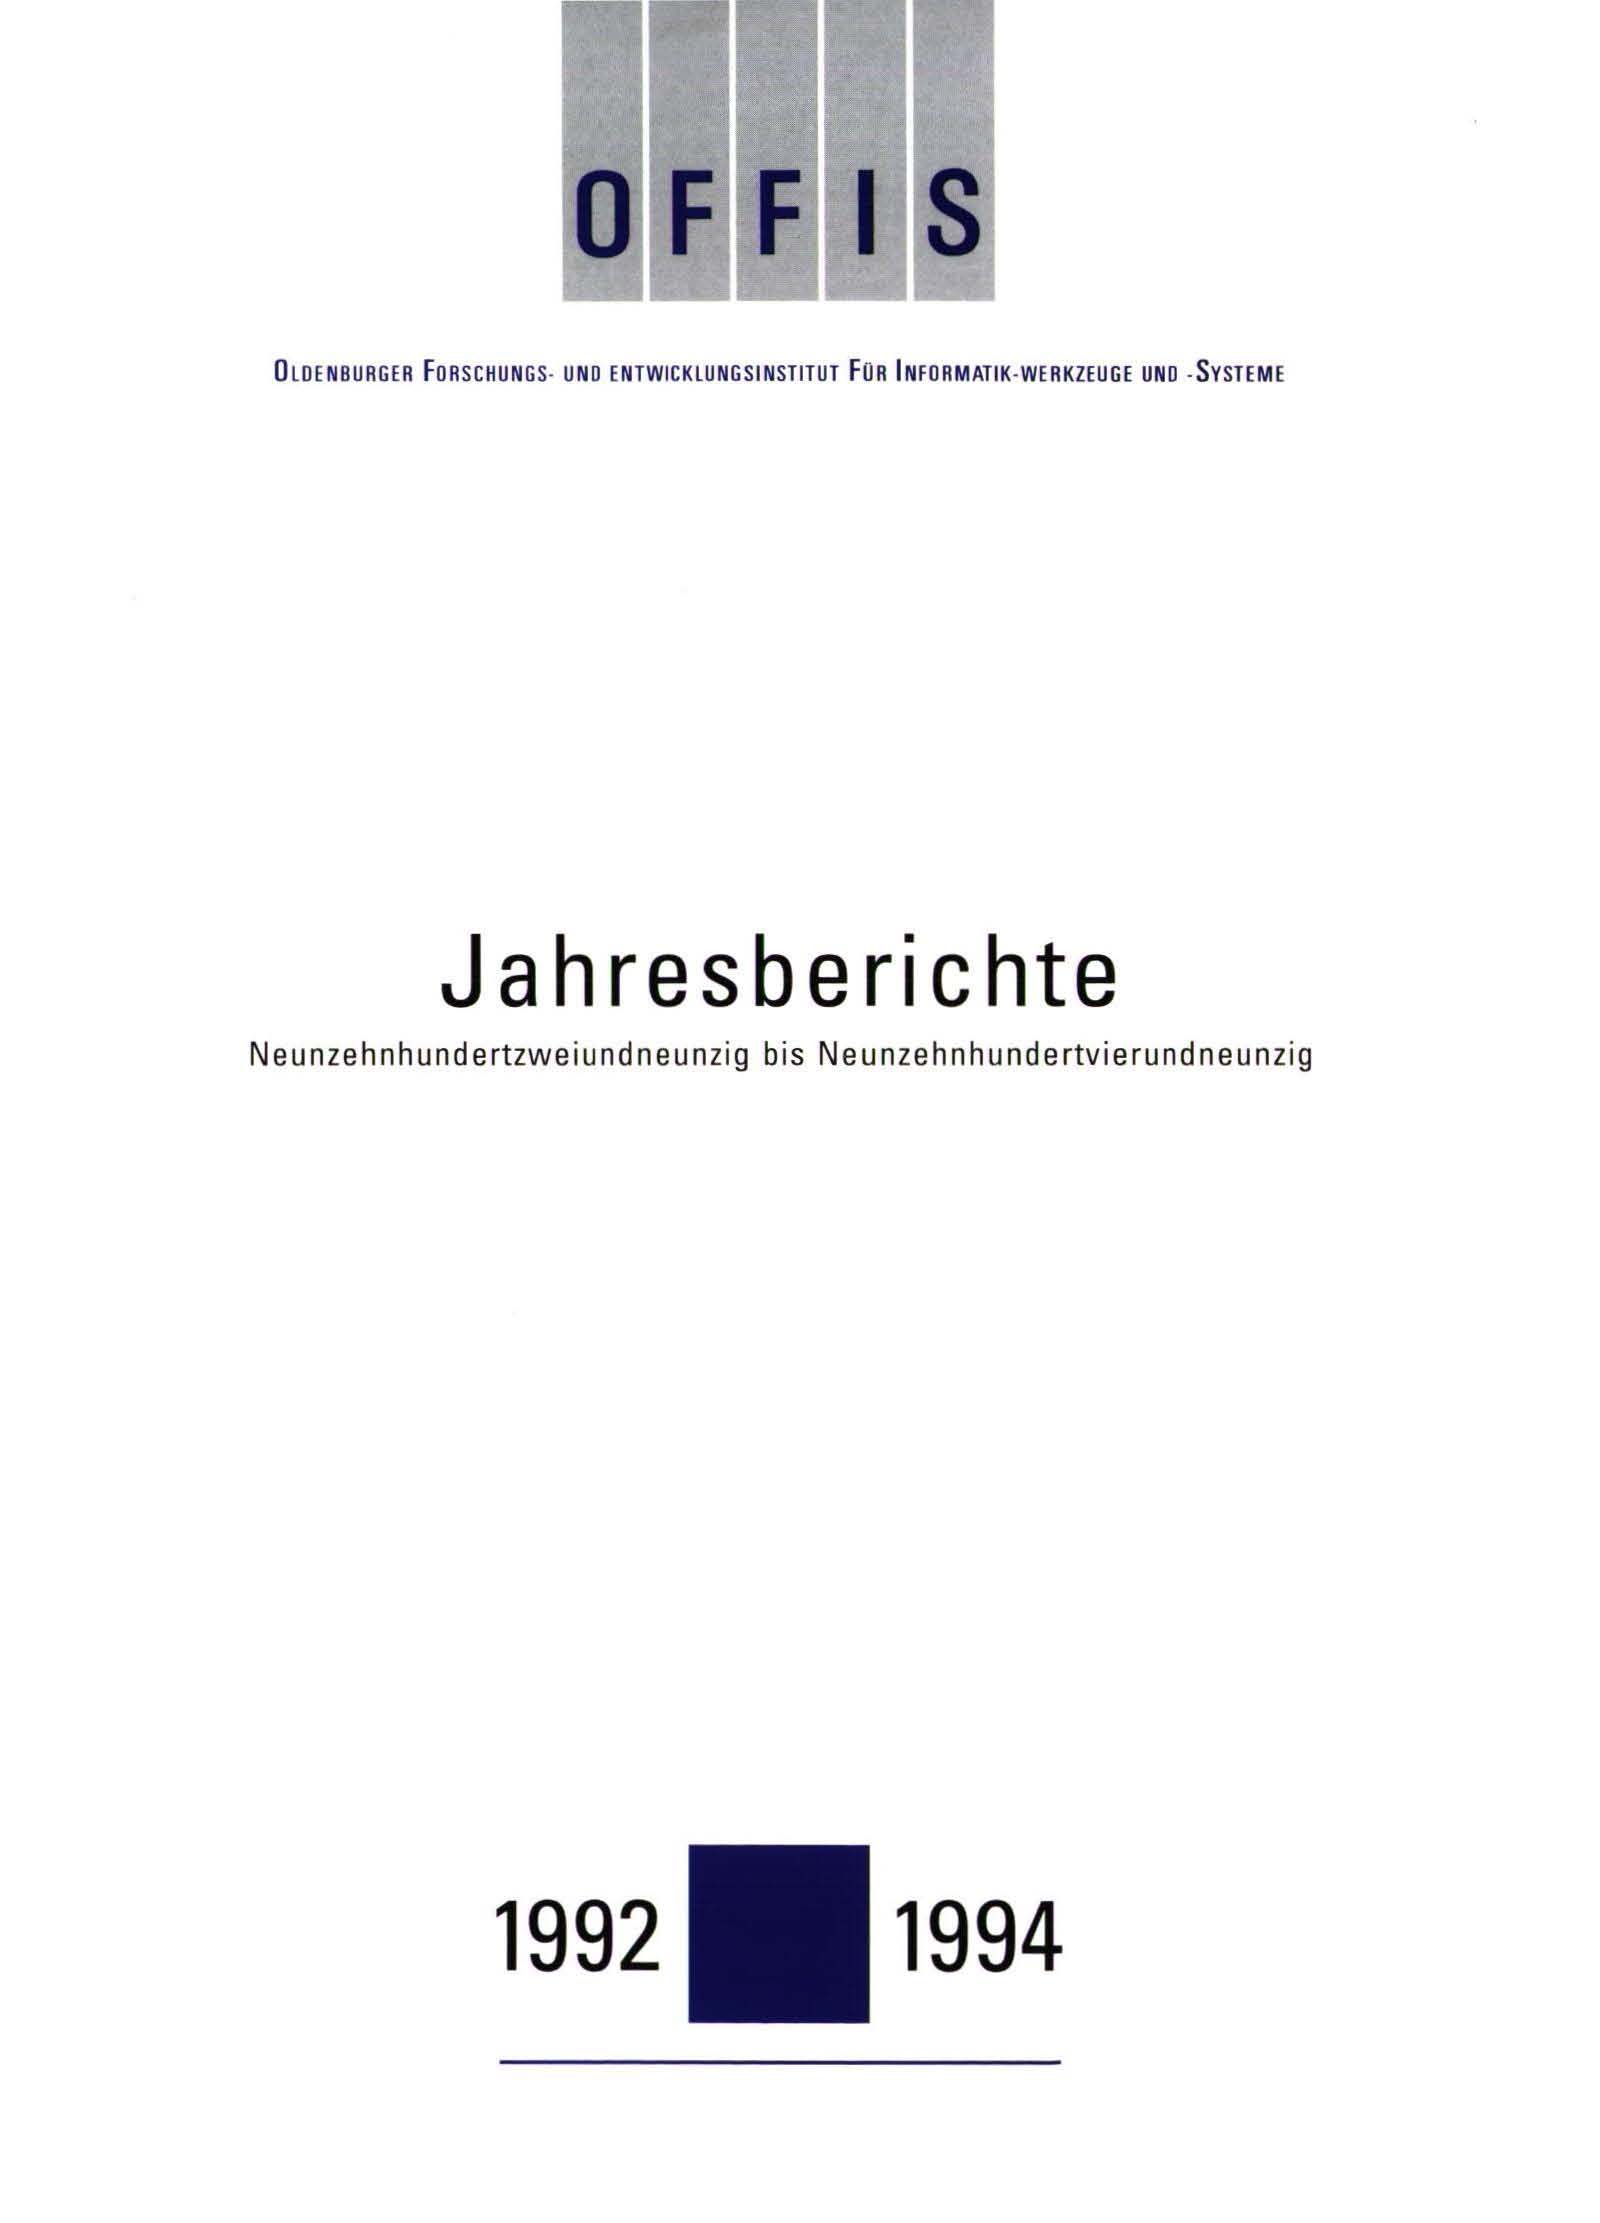 OFFIS Jahresbericht 1992-1994